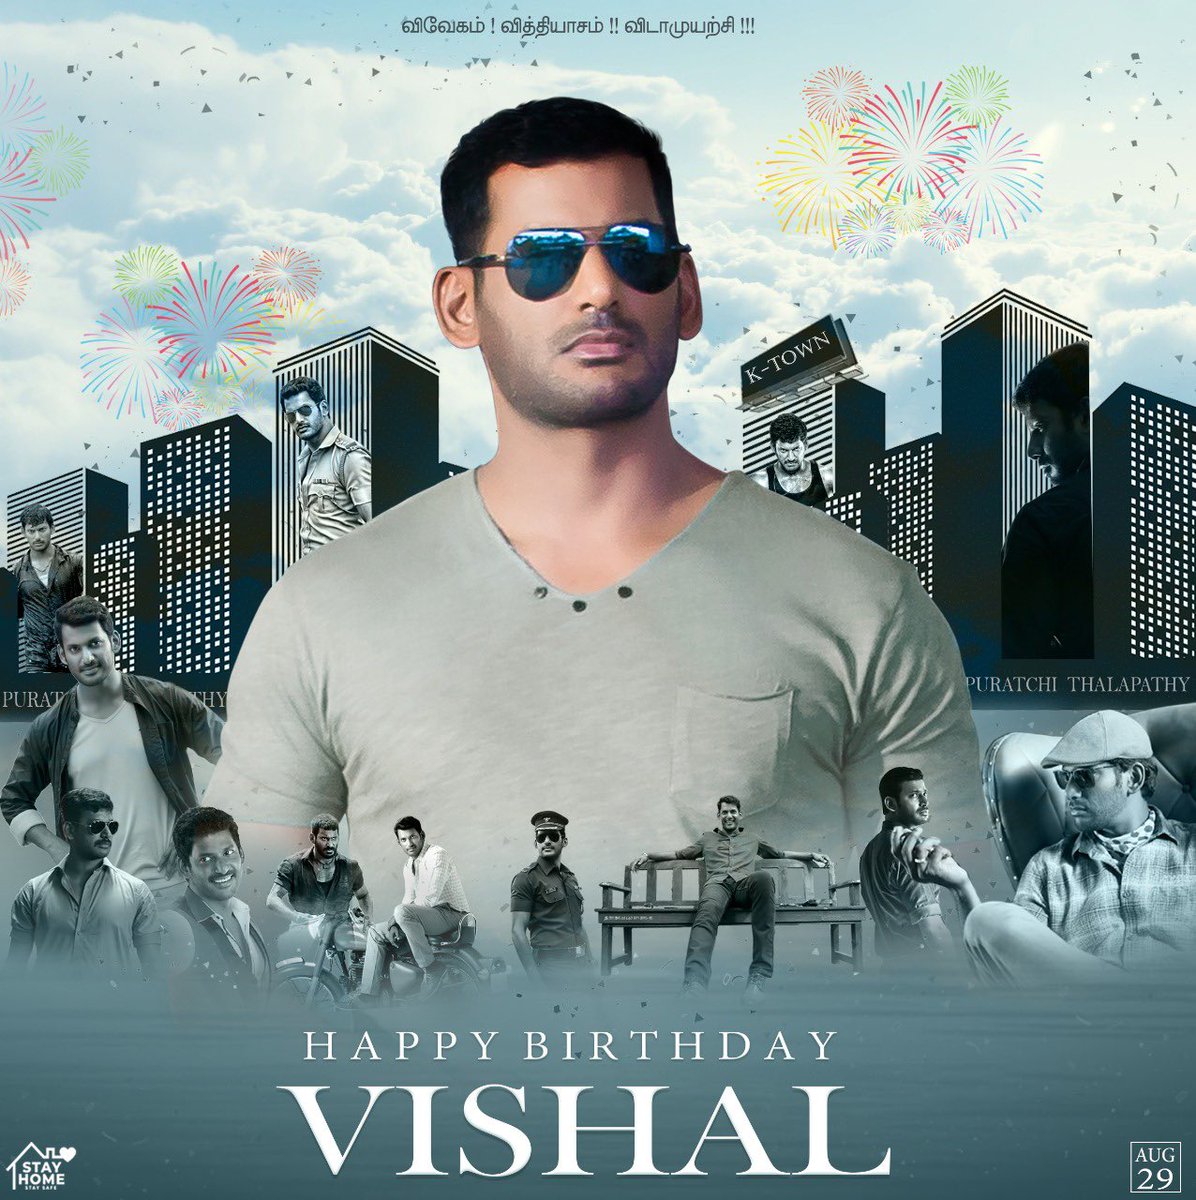 Here's a common dp of @VishalKOfficial’s Birthday!

#HBDVishal #HappyBirthdayVishal #VishalBdayCDP #vishal